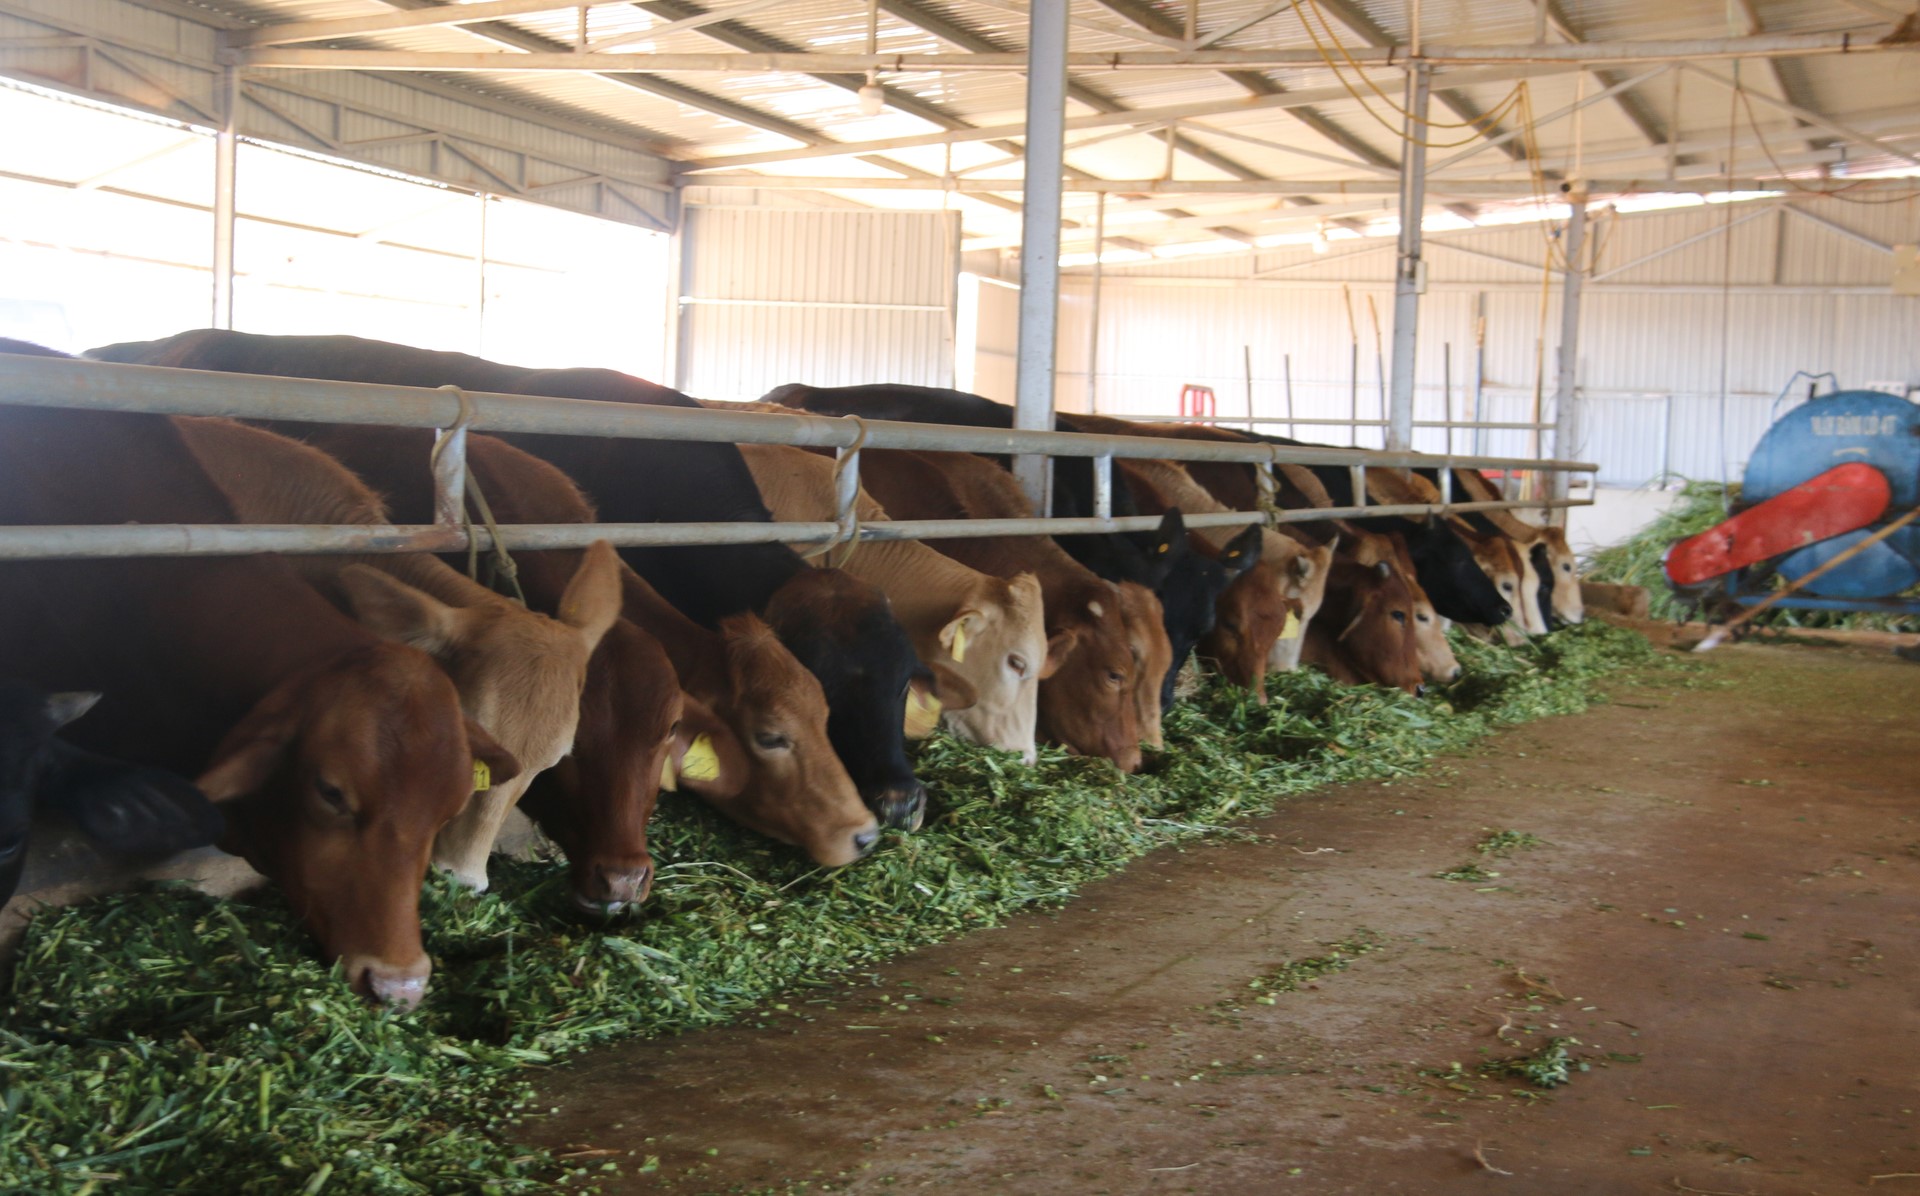 Mr. Ha Trung Hieu's cow farm is raised according to VietGAP standards. Photo: Quang Yen.